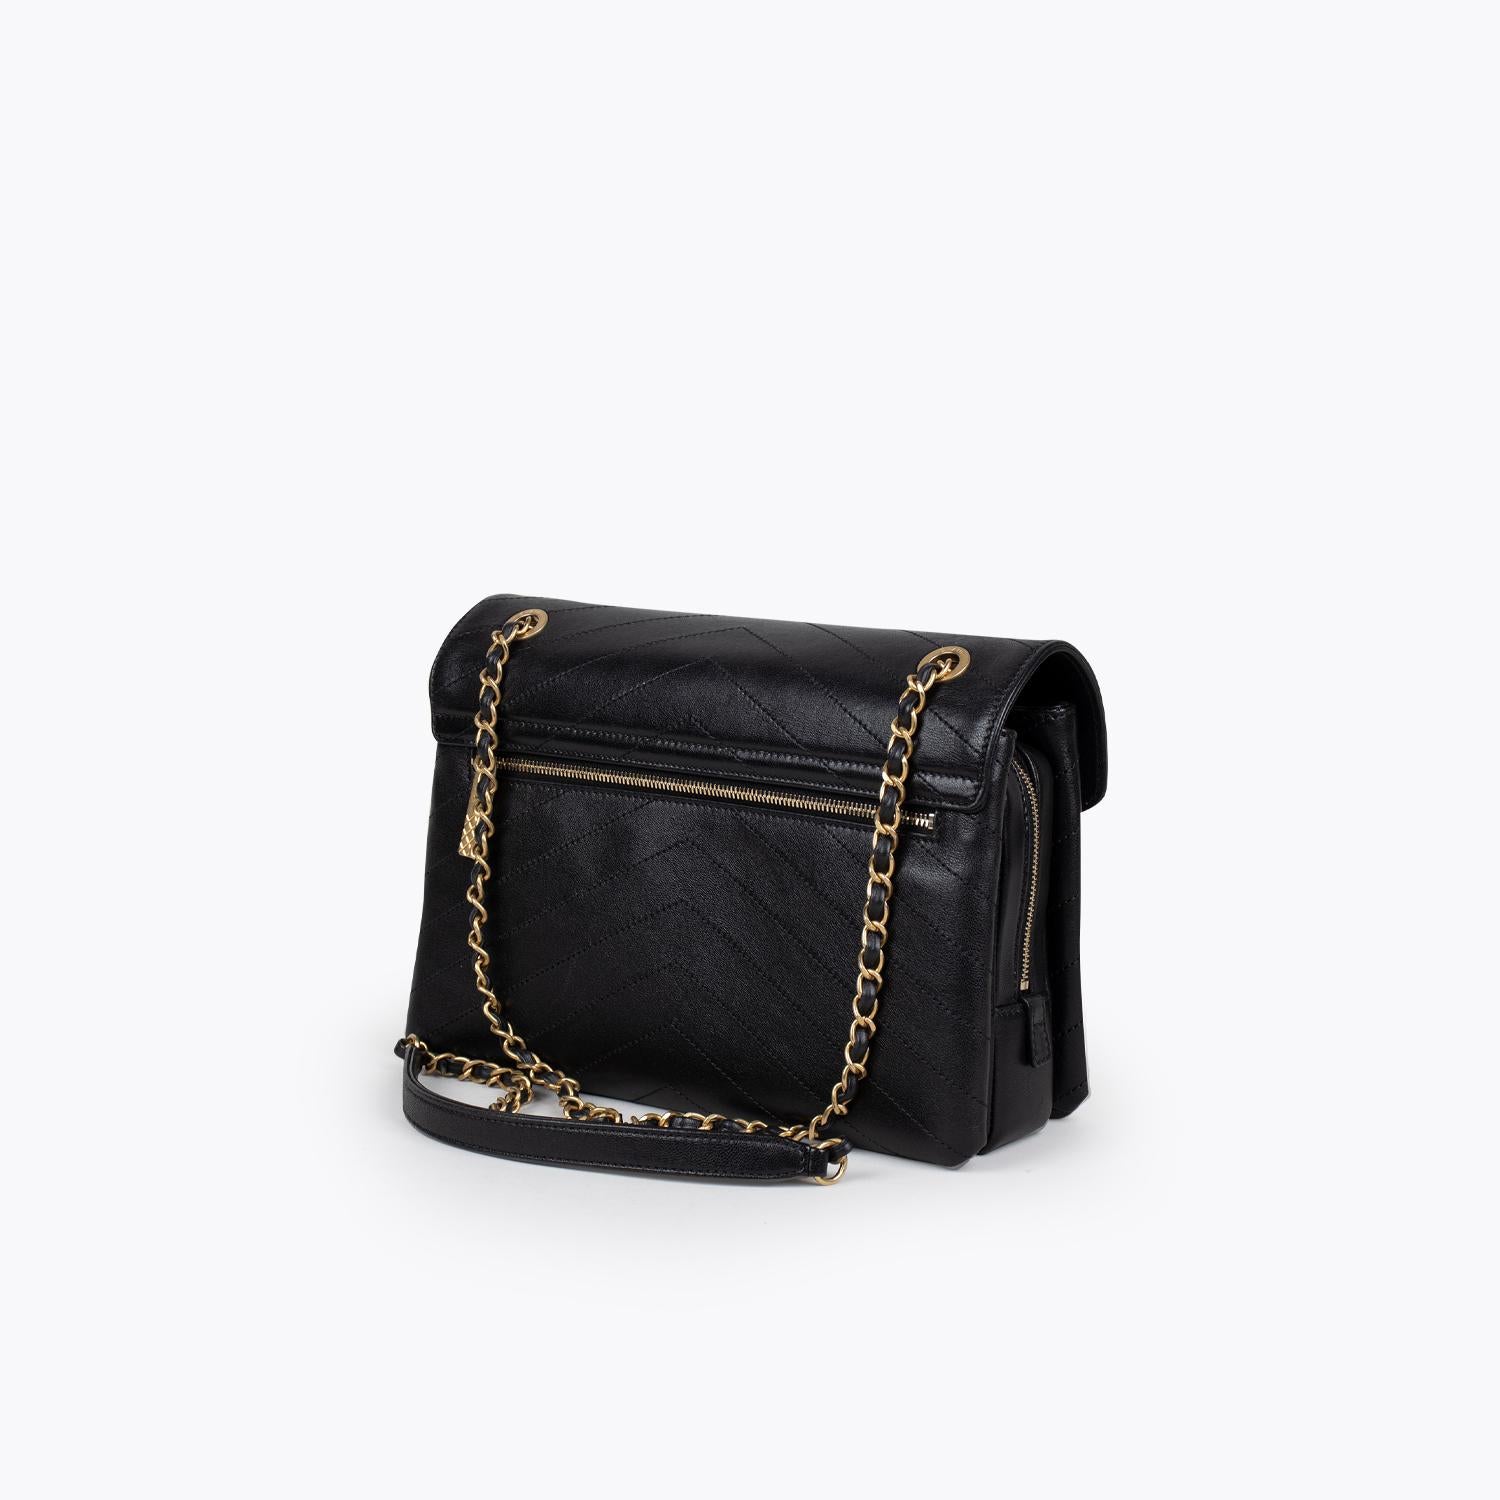 Chanel Chevron Crossbody Bag In Good Condition For Sale In Sundbyberg, SE